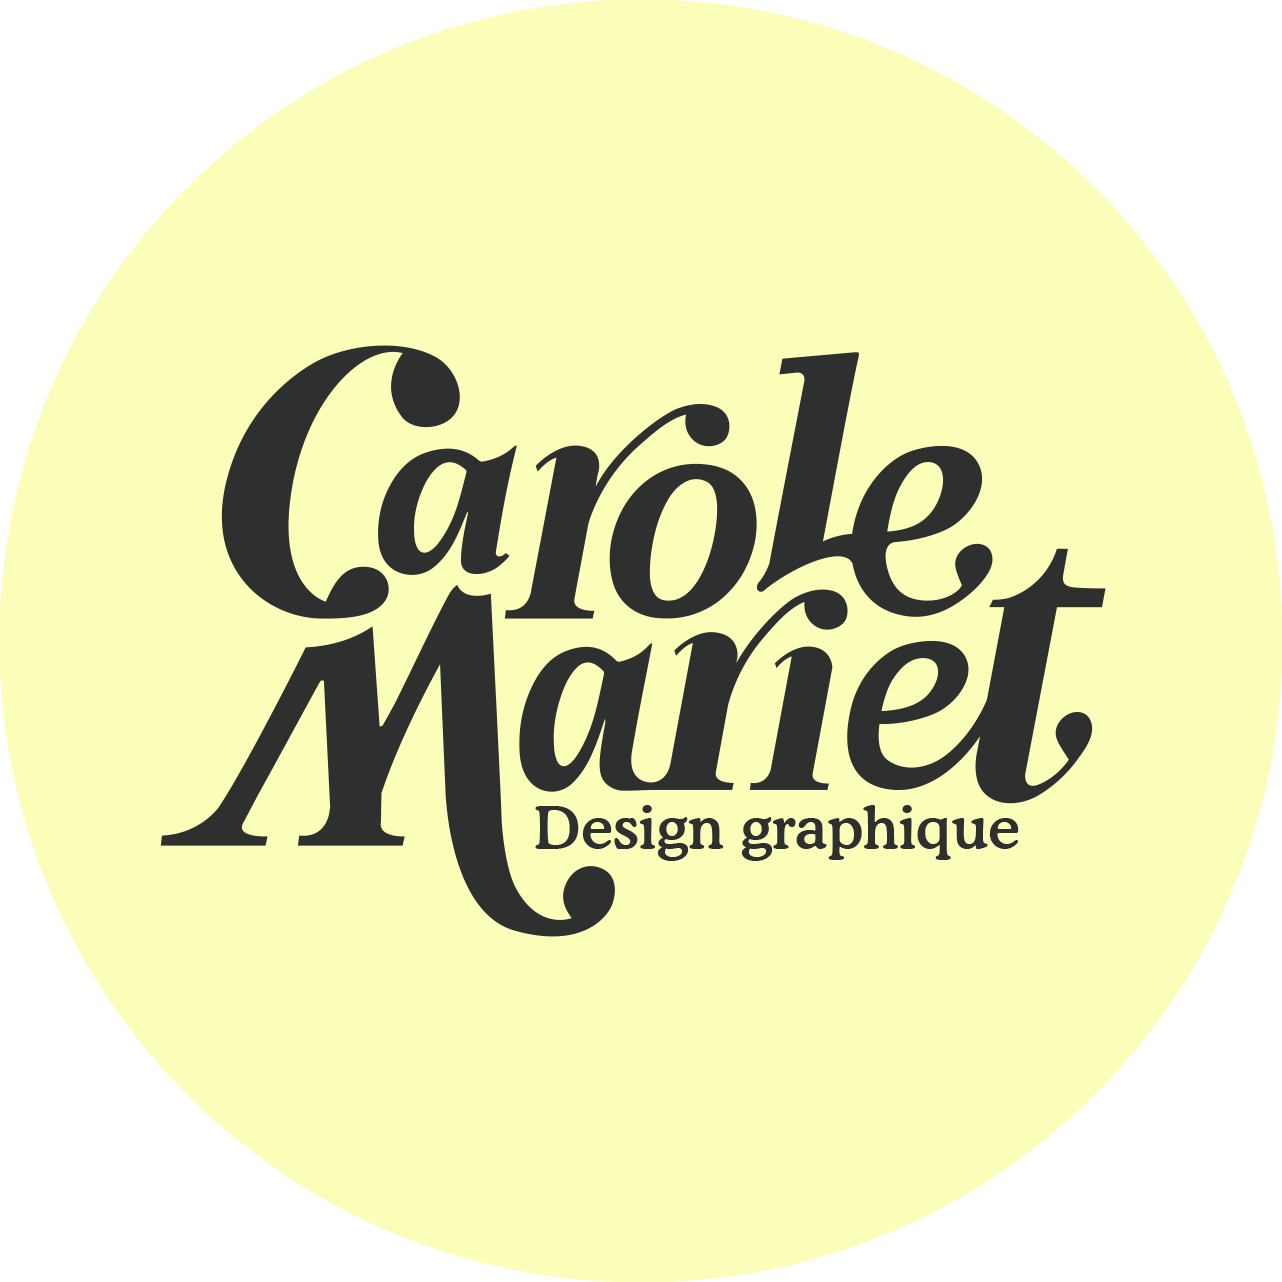 carole mariet design graphique